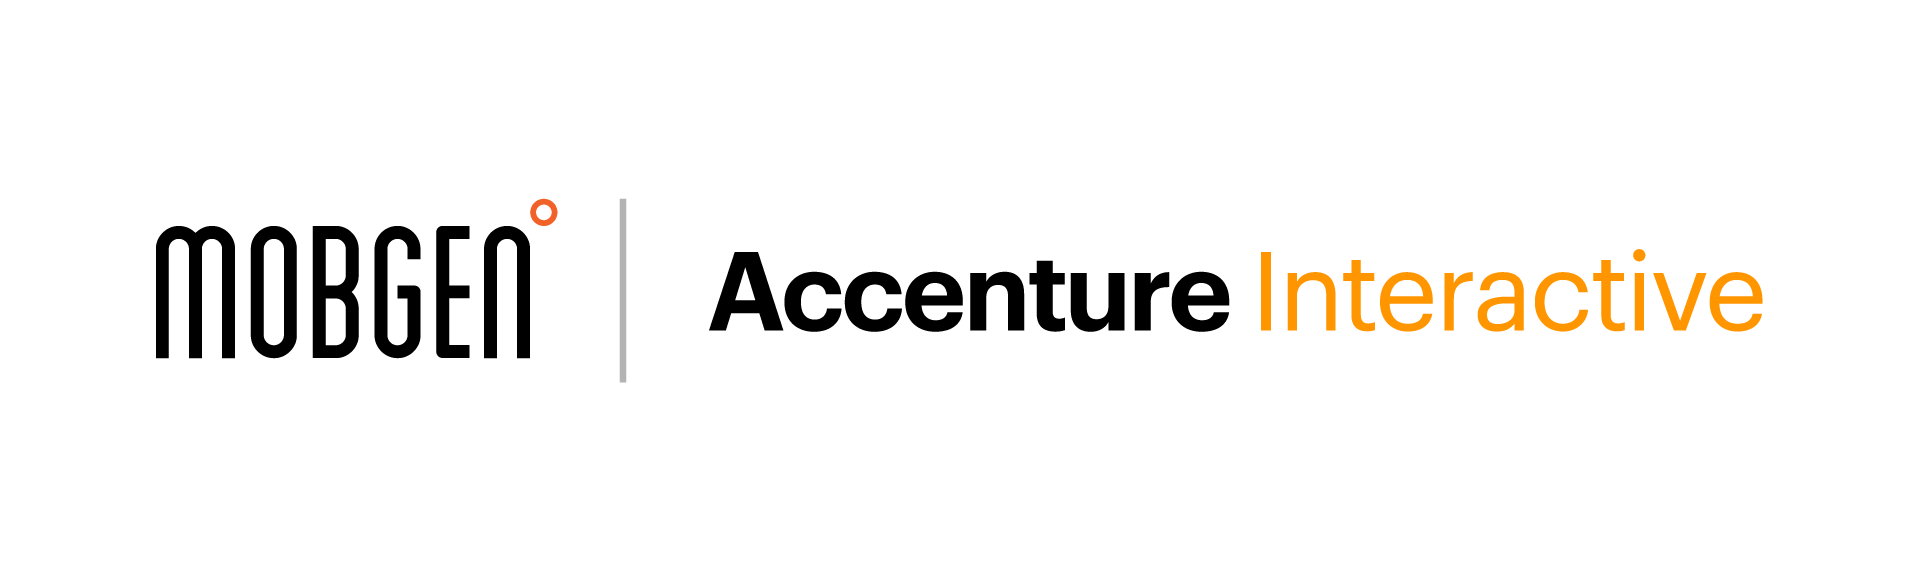 Accenture Digital Logo - The Next Web Conference 2018 - MOBGEN